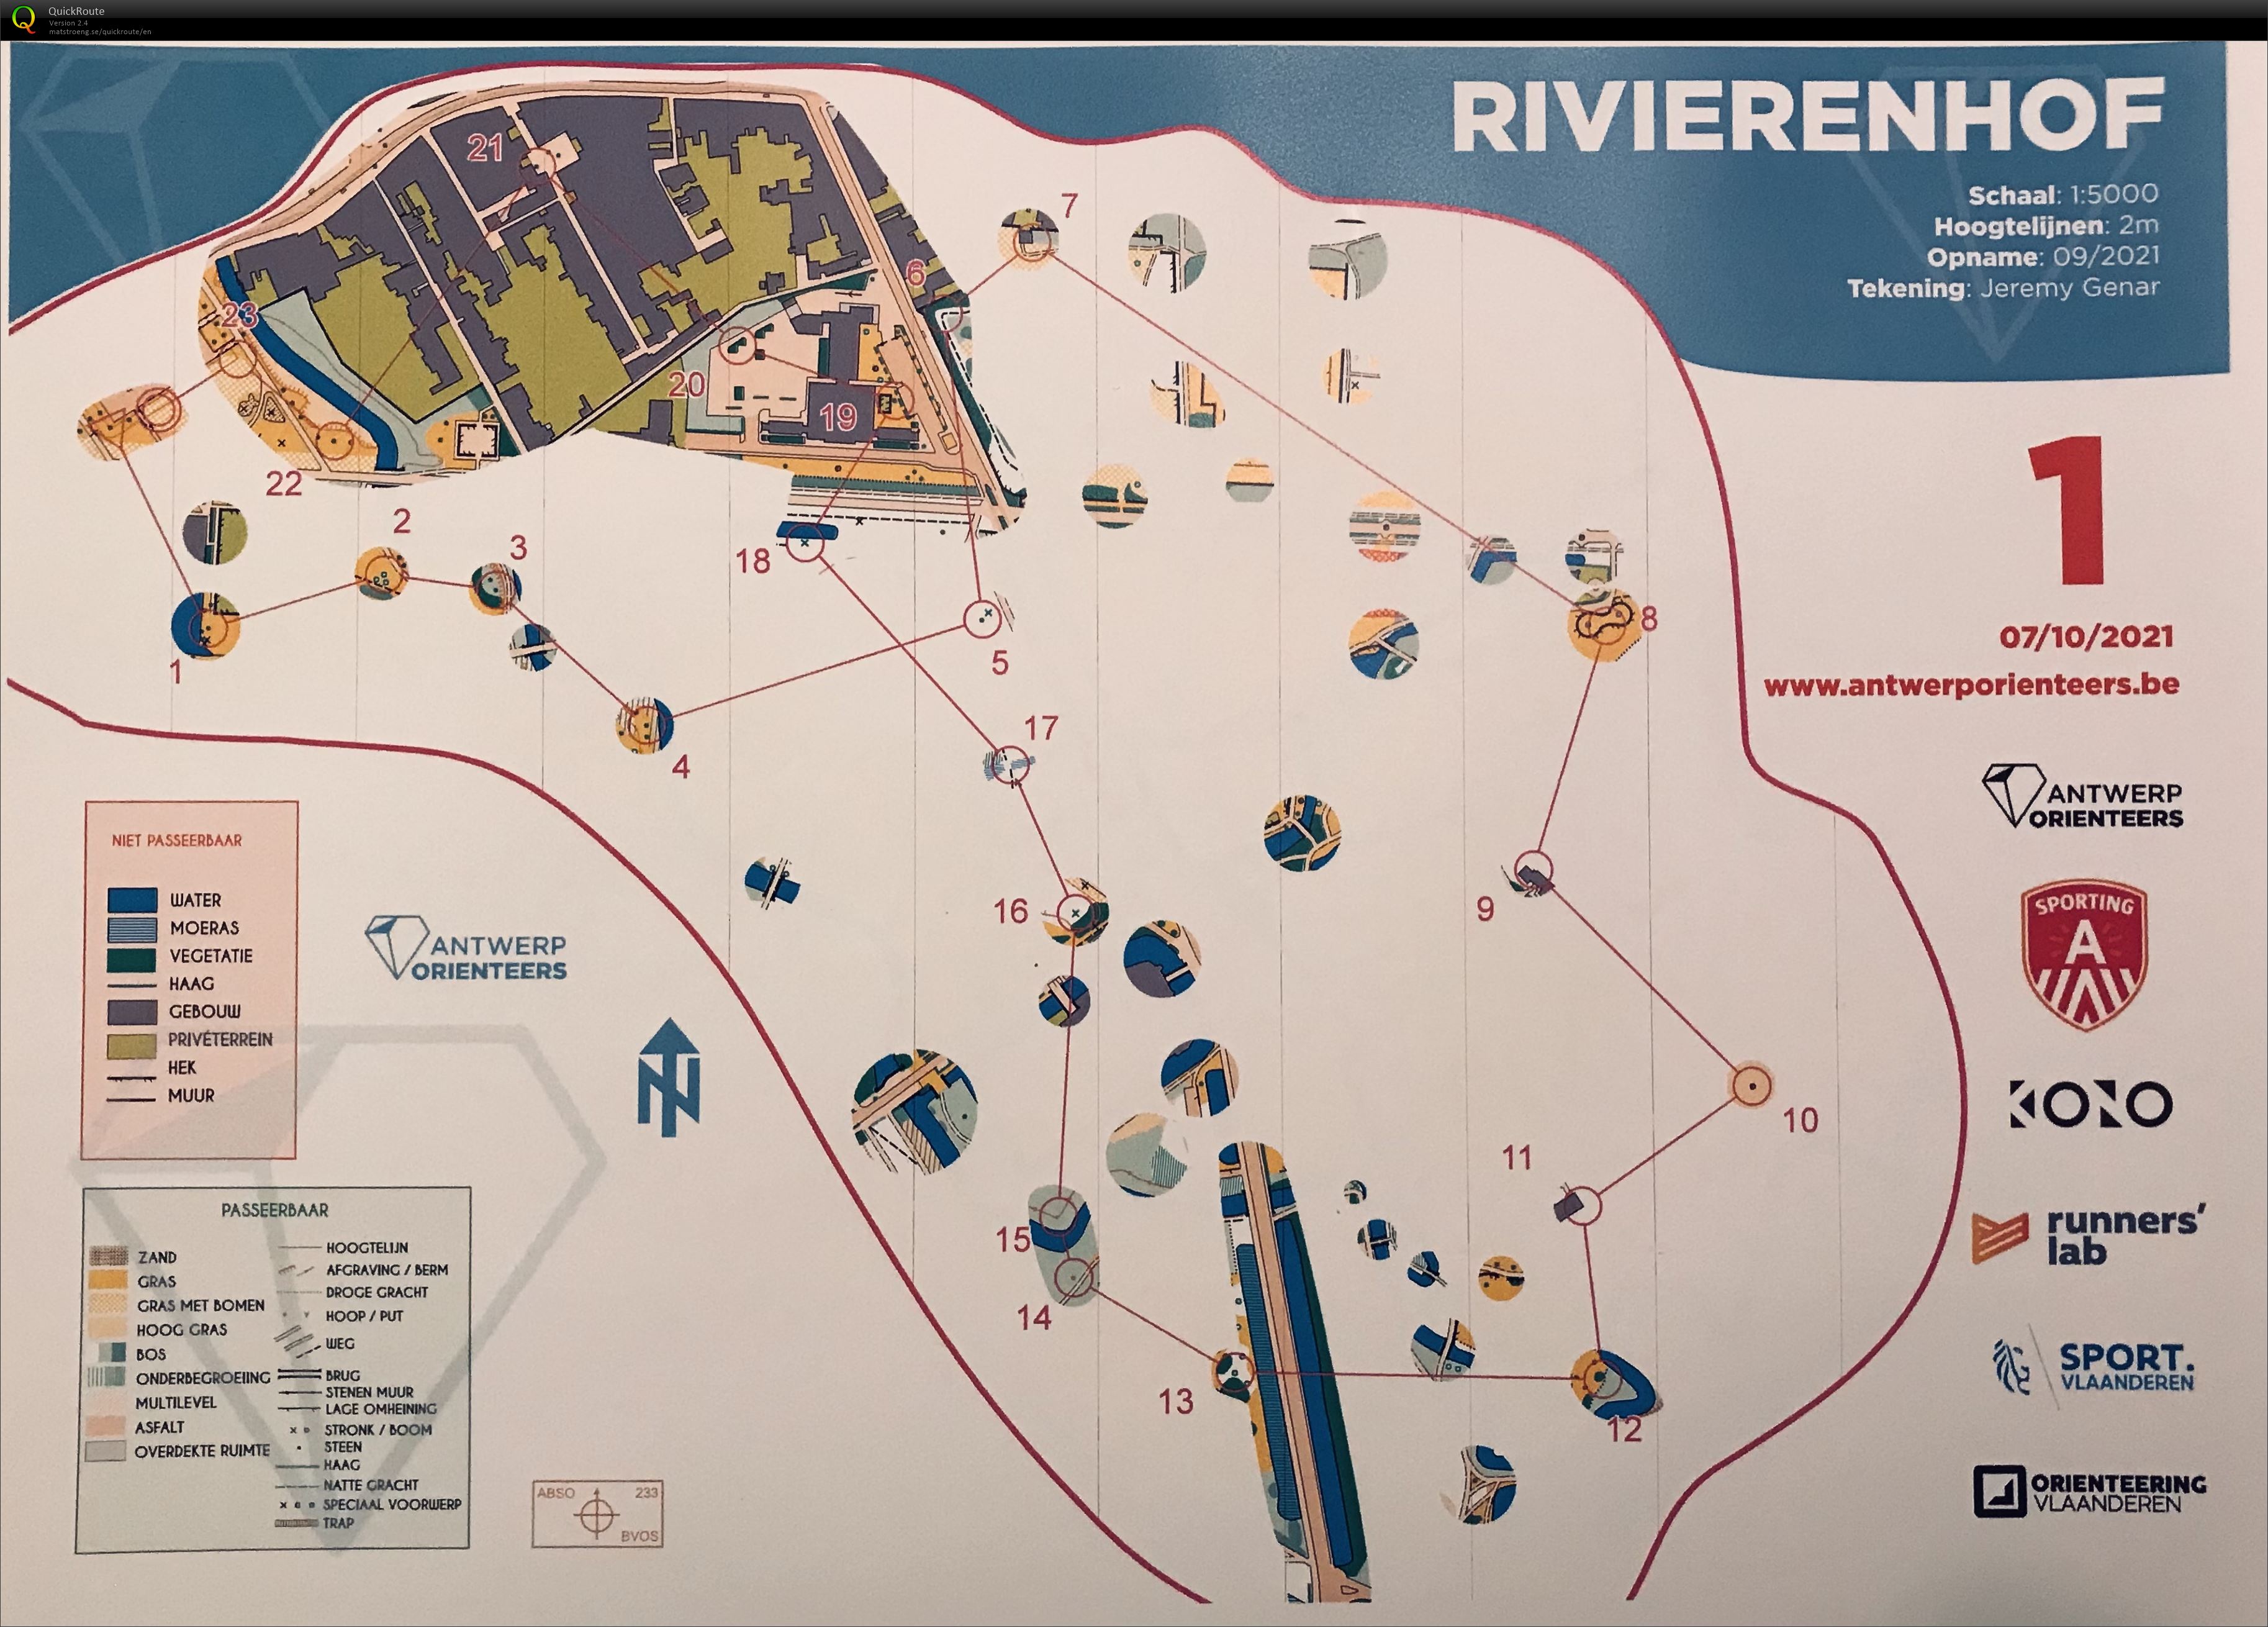 Antwerp Orienteers AOS Rivierenhof 20211007 (07/10/2021)